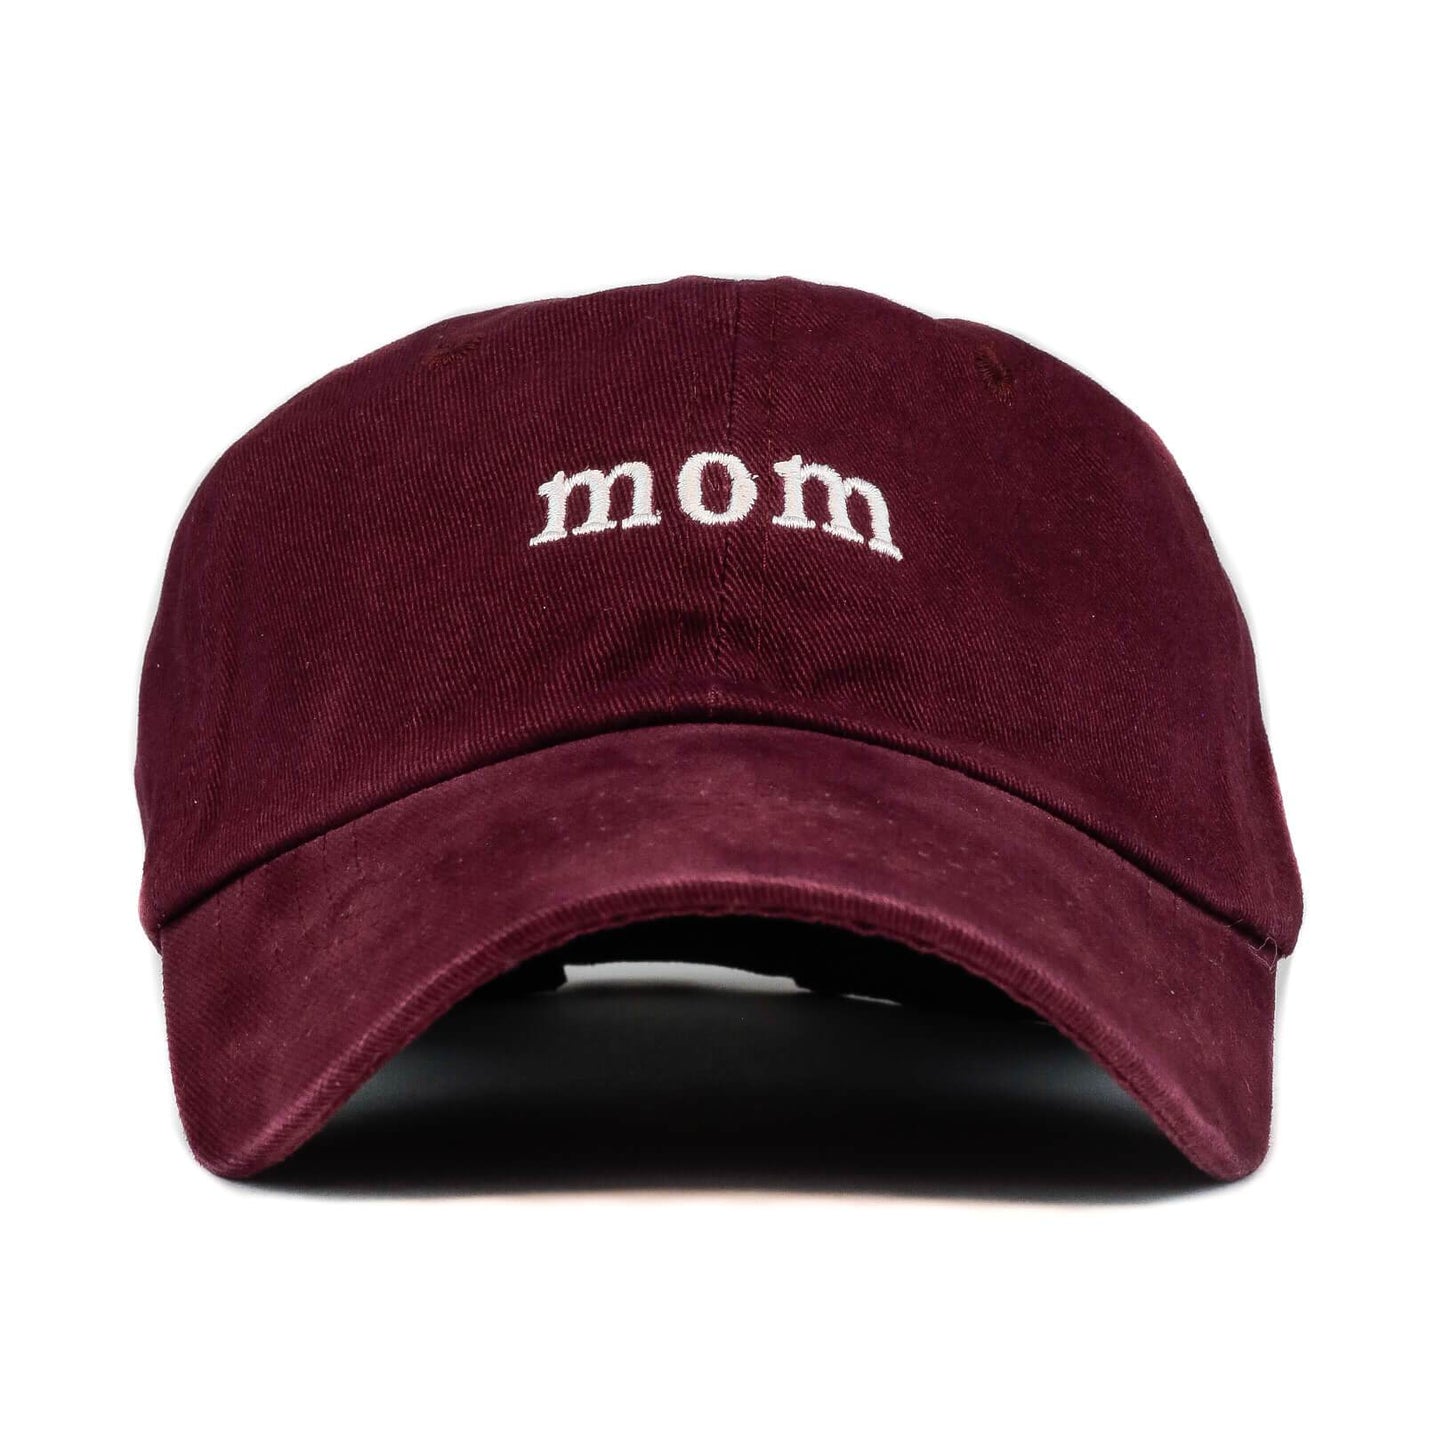 Mom Cap (Maroon)